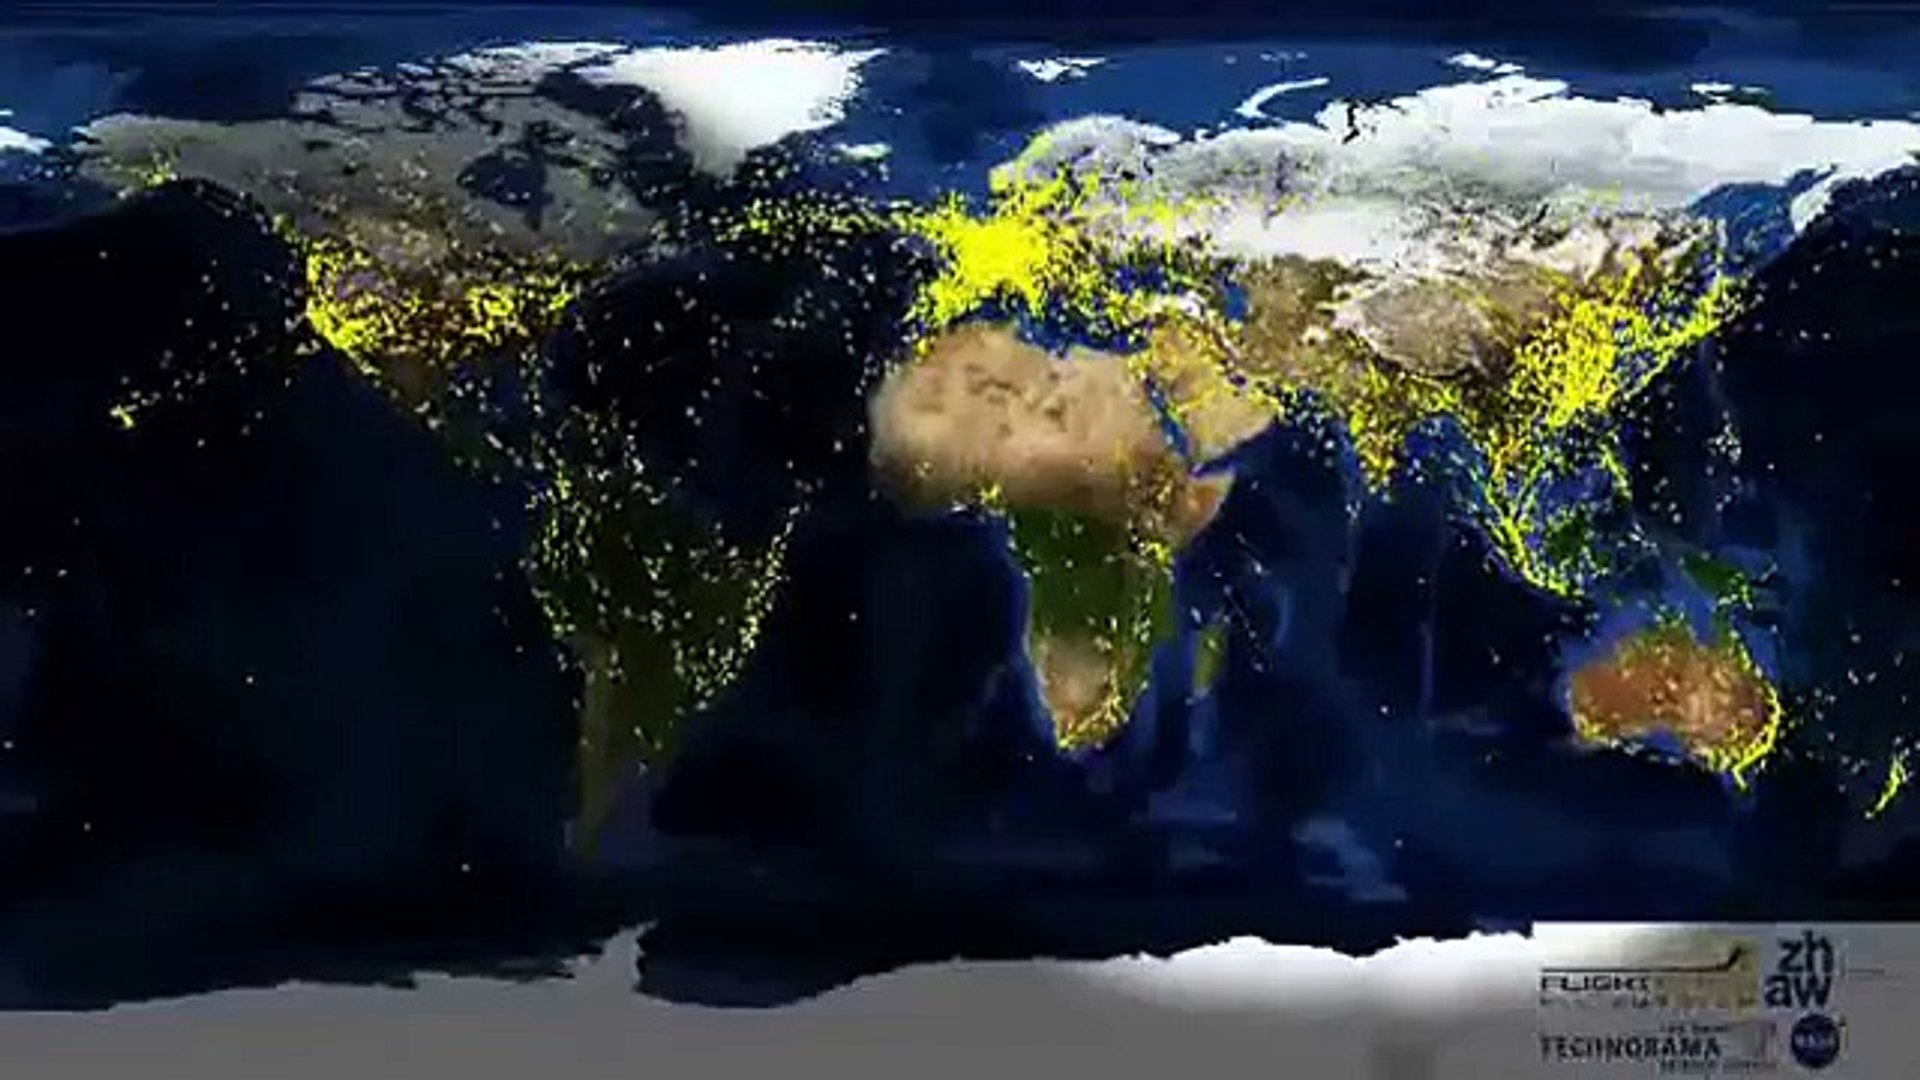 Flights around the world